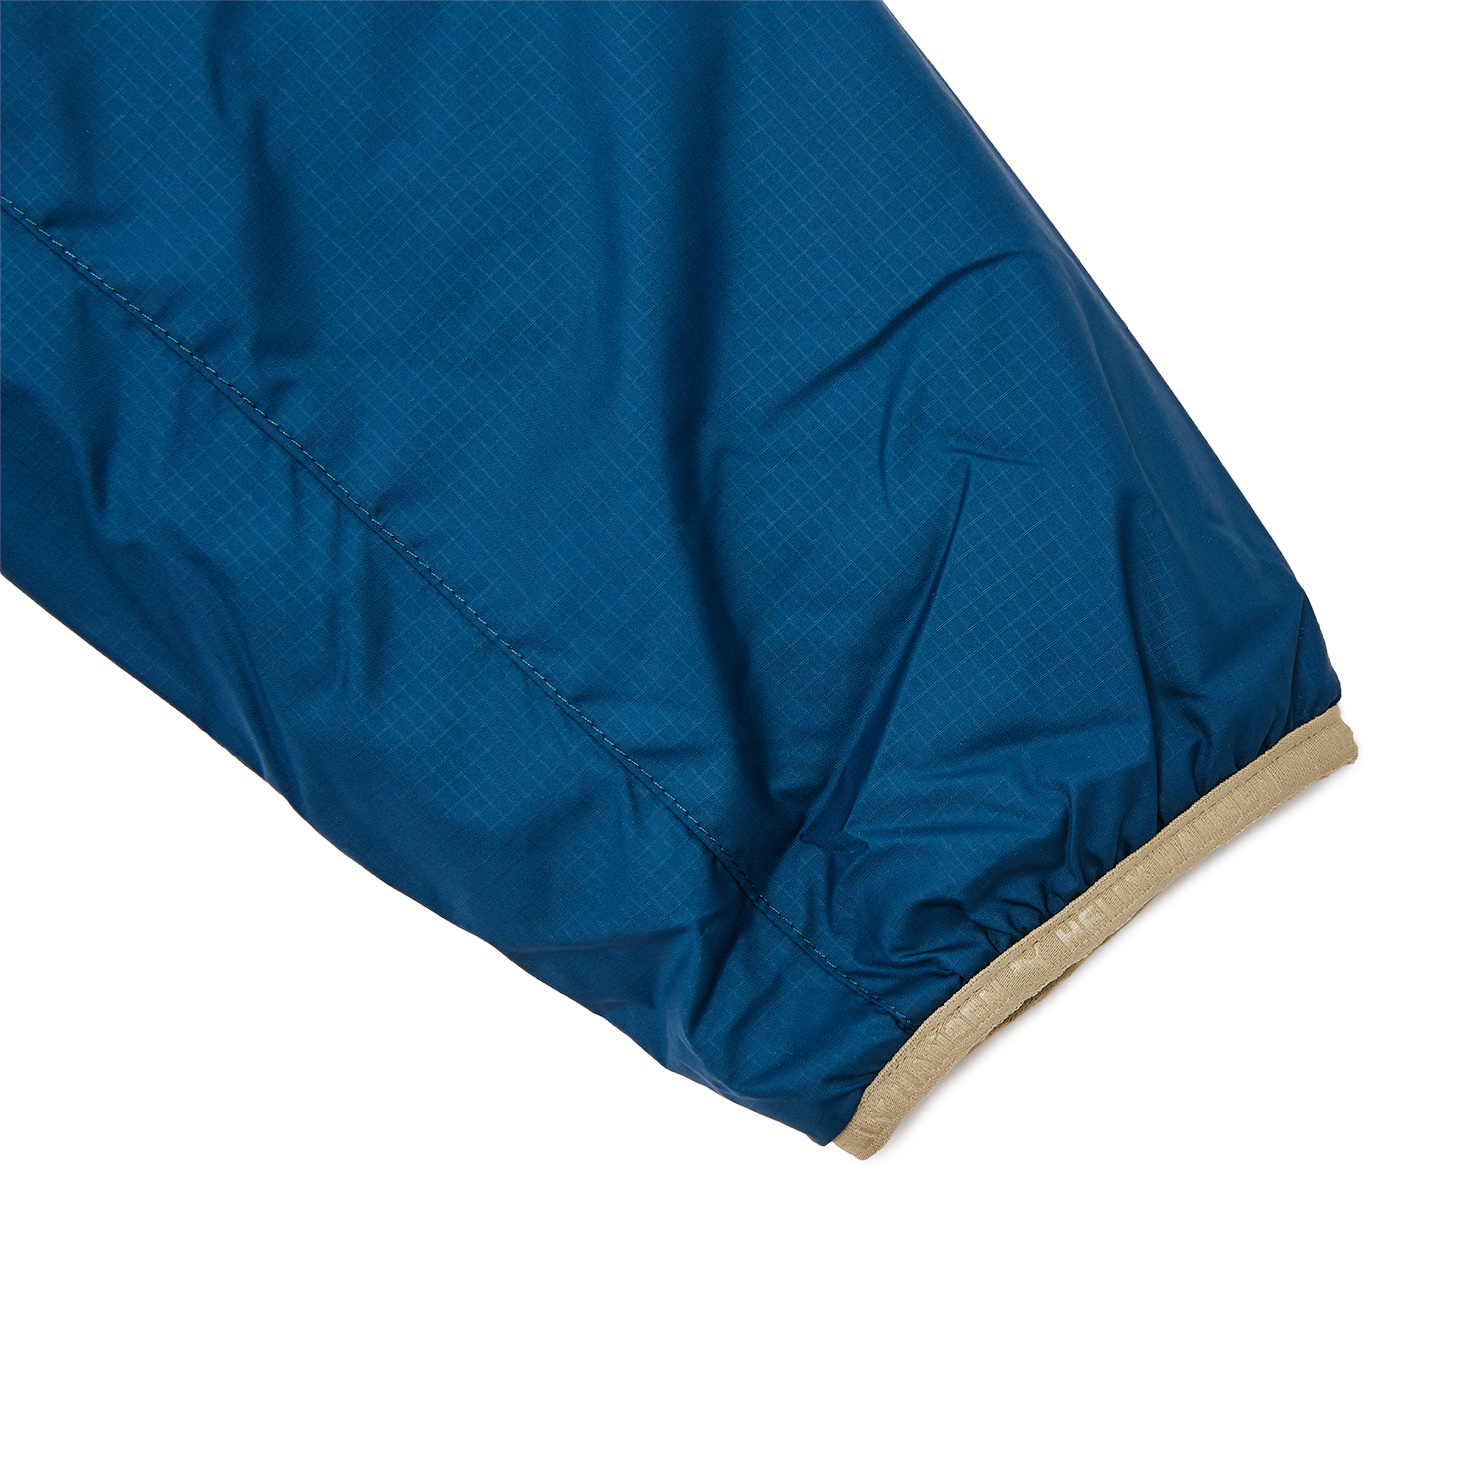 PUMA x HELLY HANSEN Rev. Padded Jacket S PUMA, размер 46-48, цвет синий PM532841 - фото 5